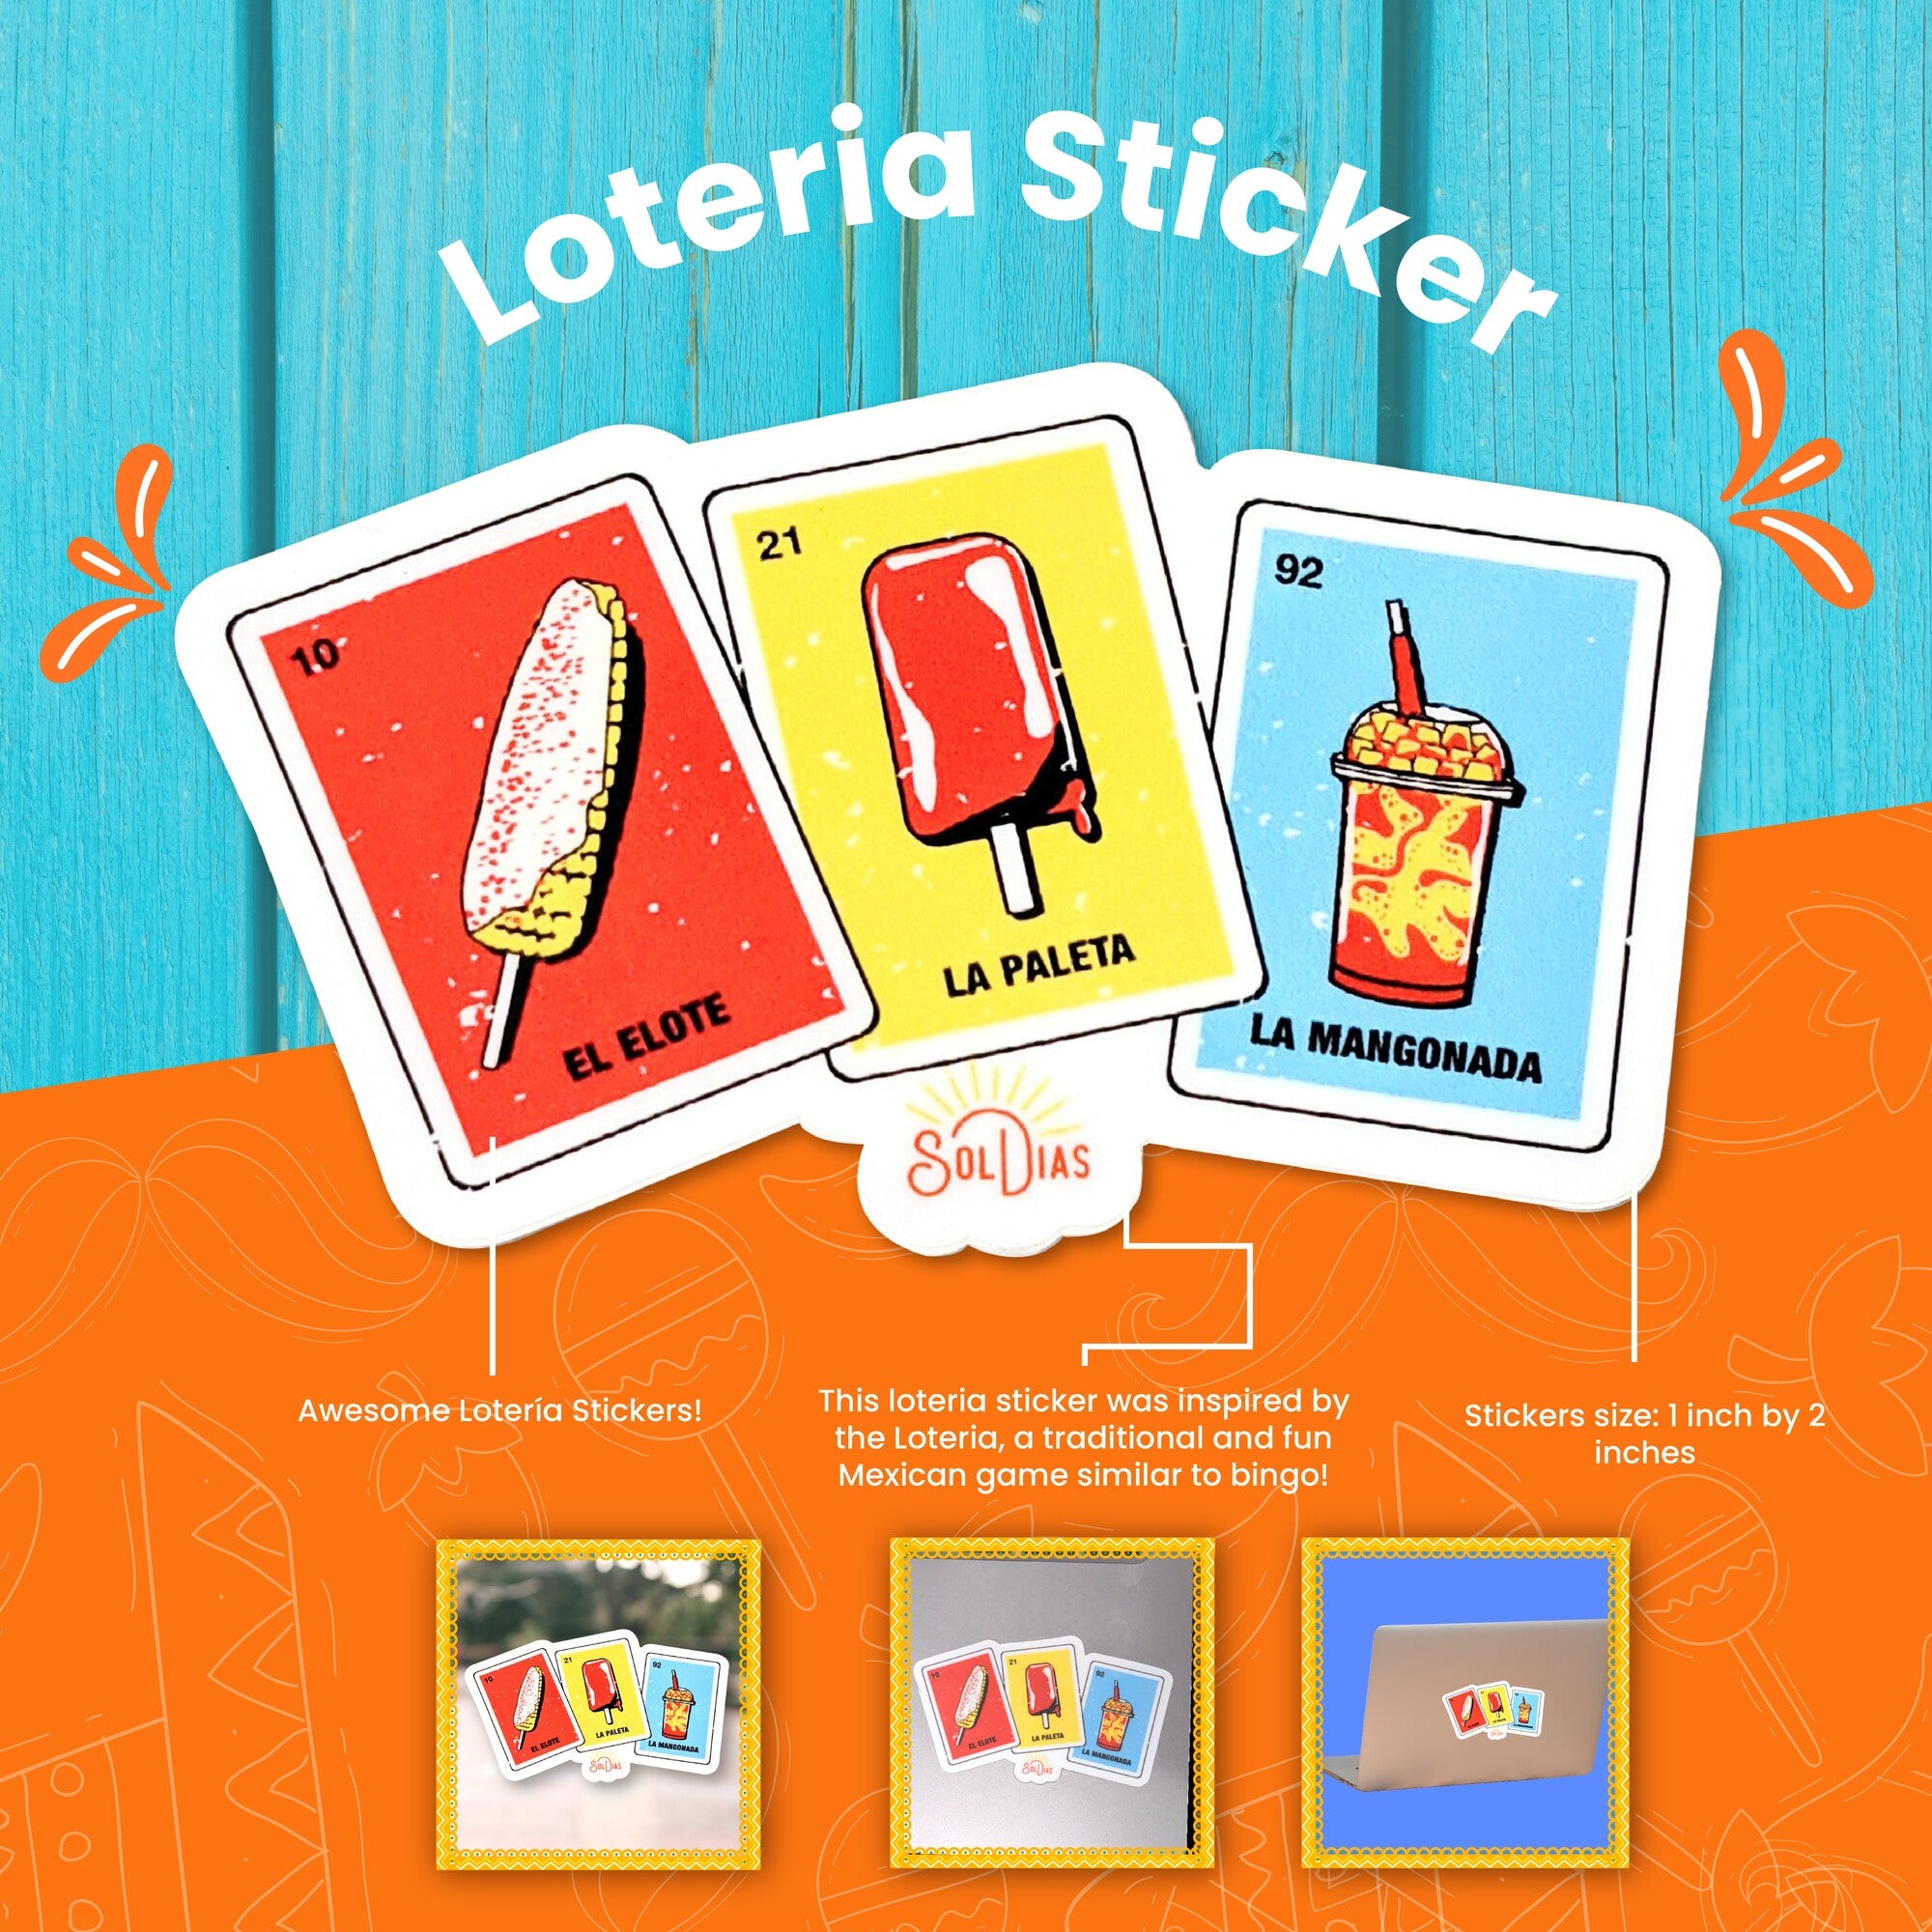 Loteria Sticker - Sol Dias